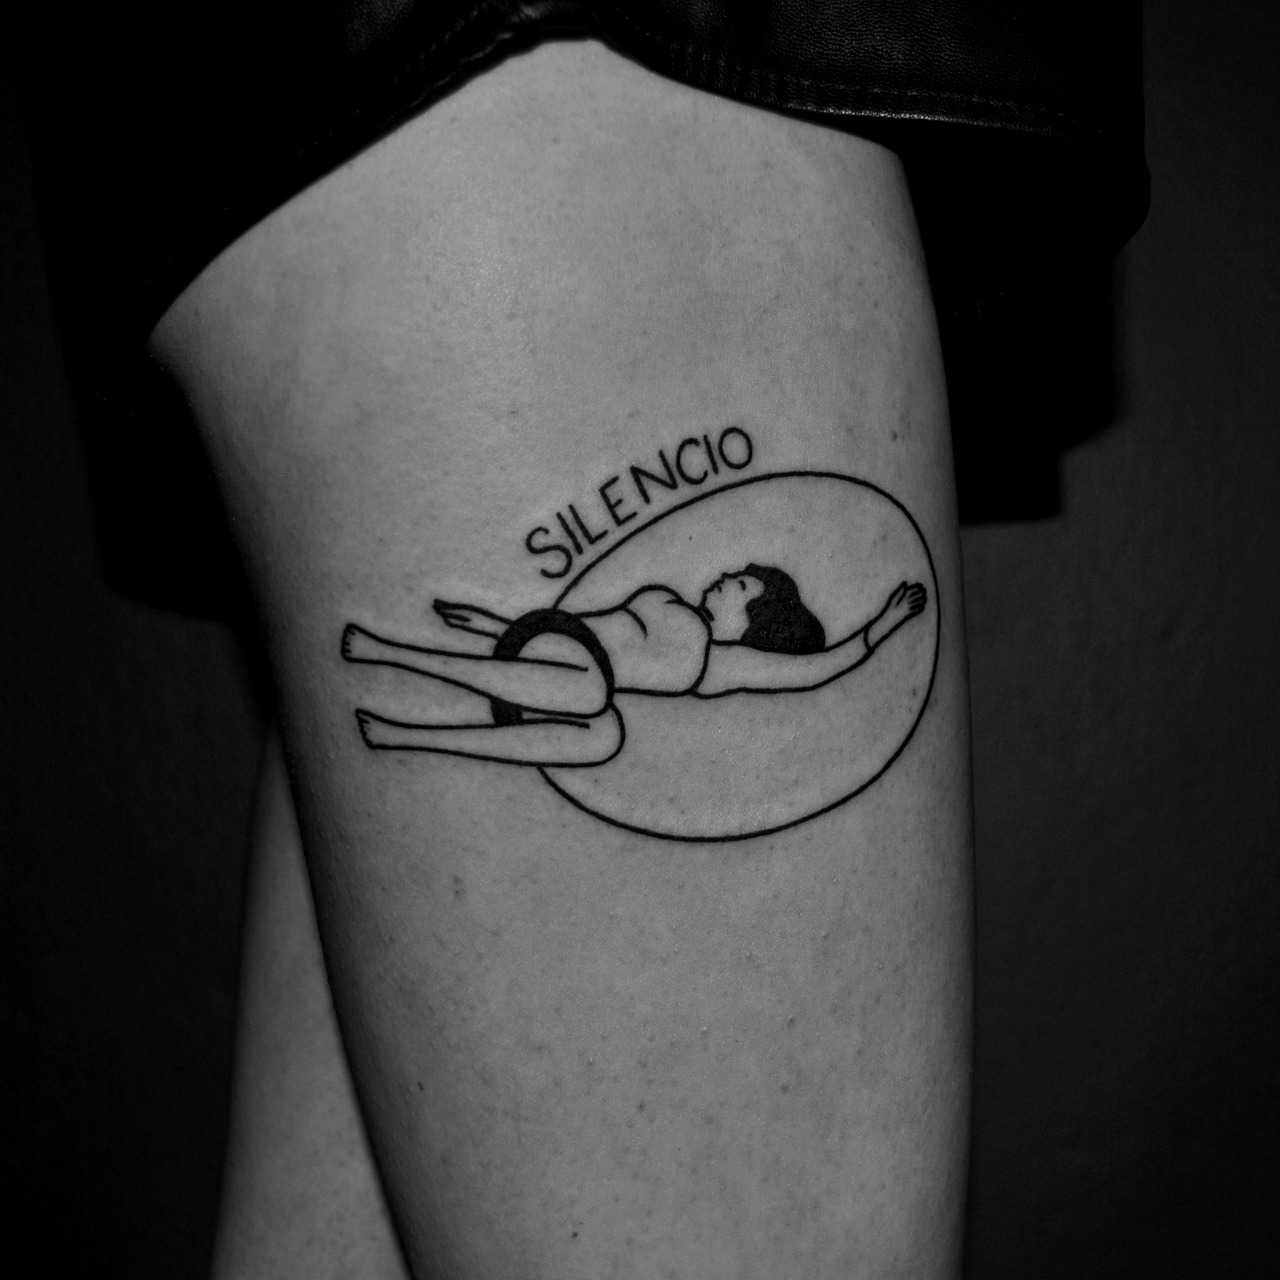 Silencio tattoo by Berkin Donmezz